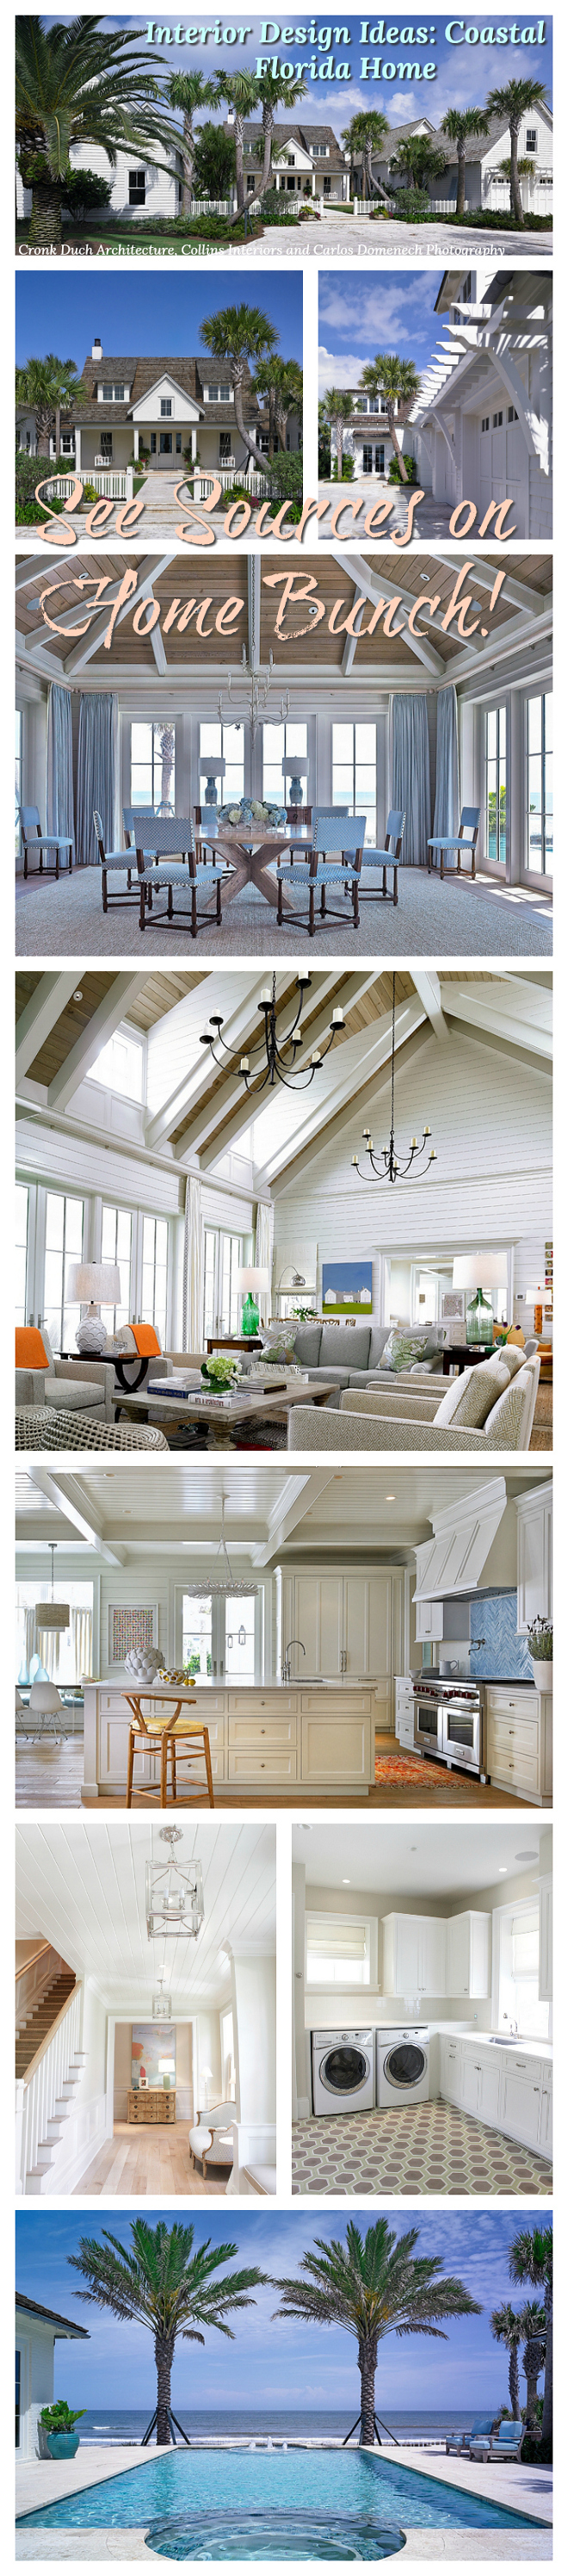 Interior Design Ideas Coastal Florida Home interior decor sources paint colors on Home Bunch